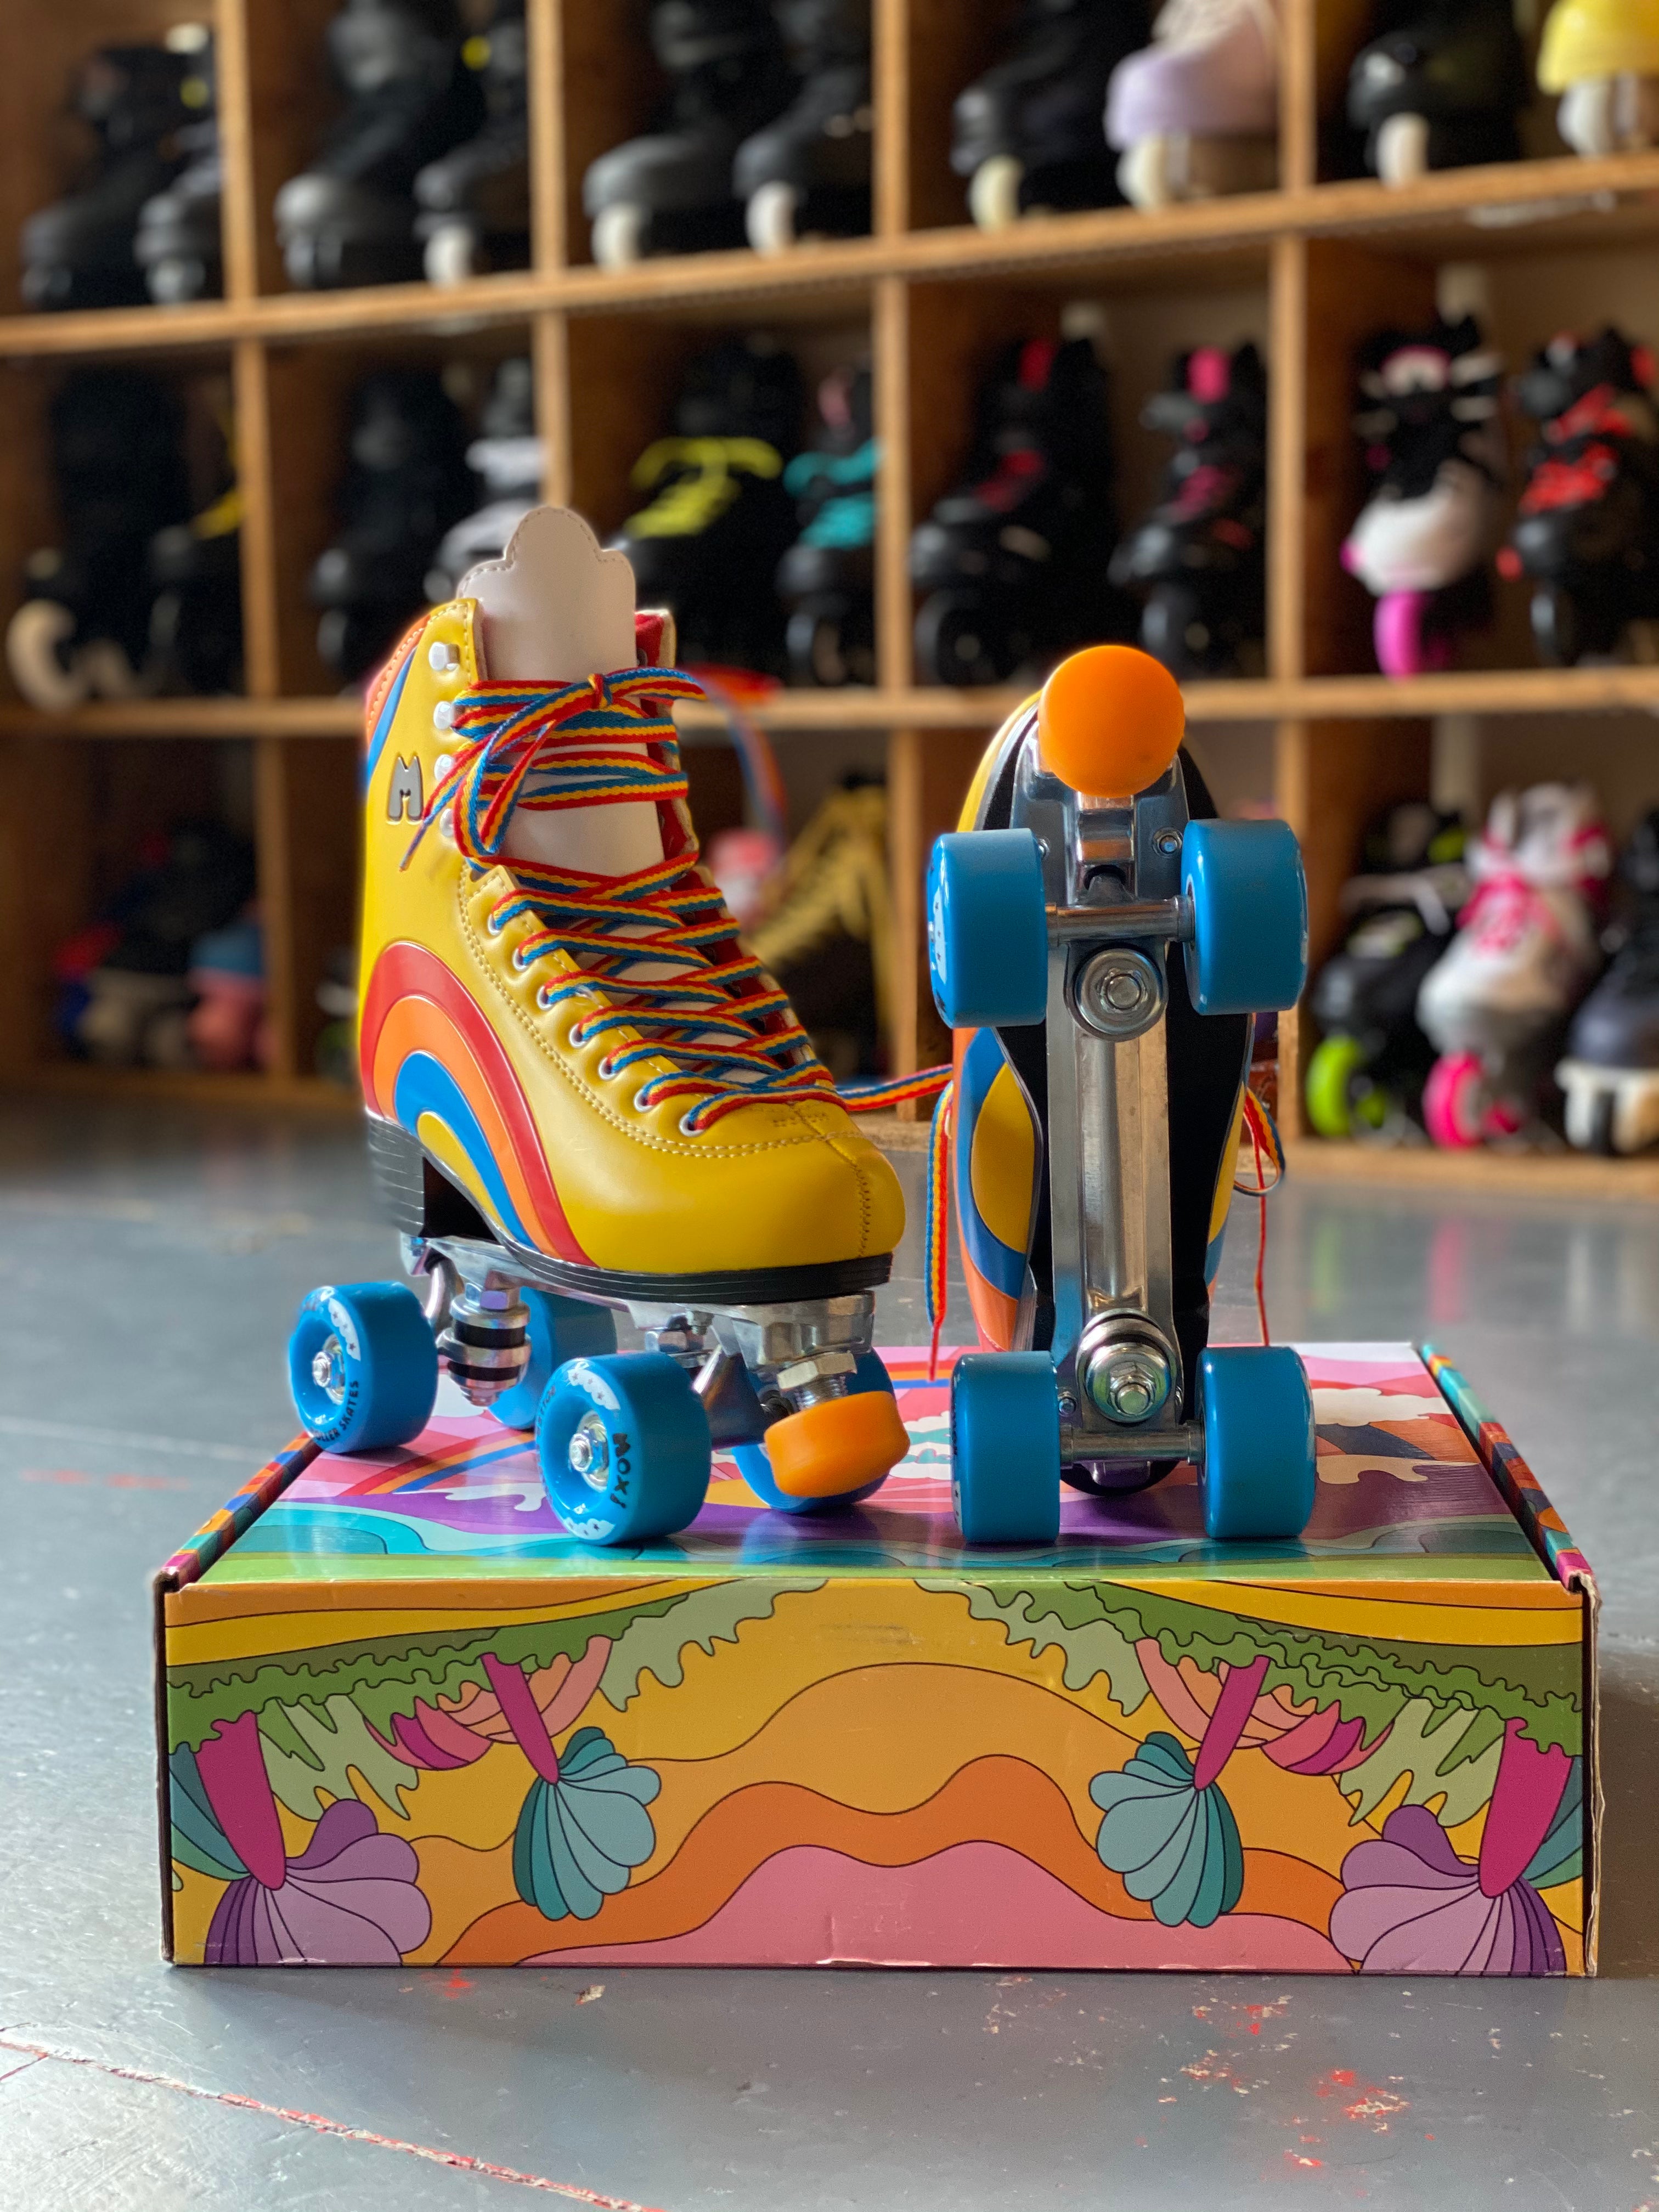 Moxi Rainbow Ride Roller Skates